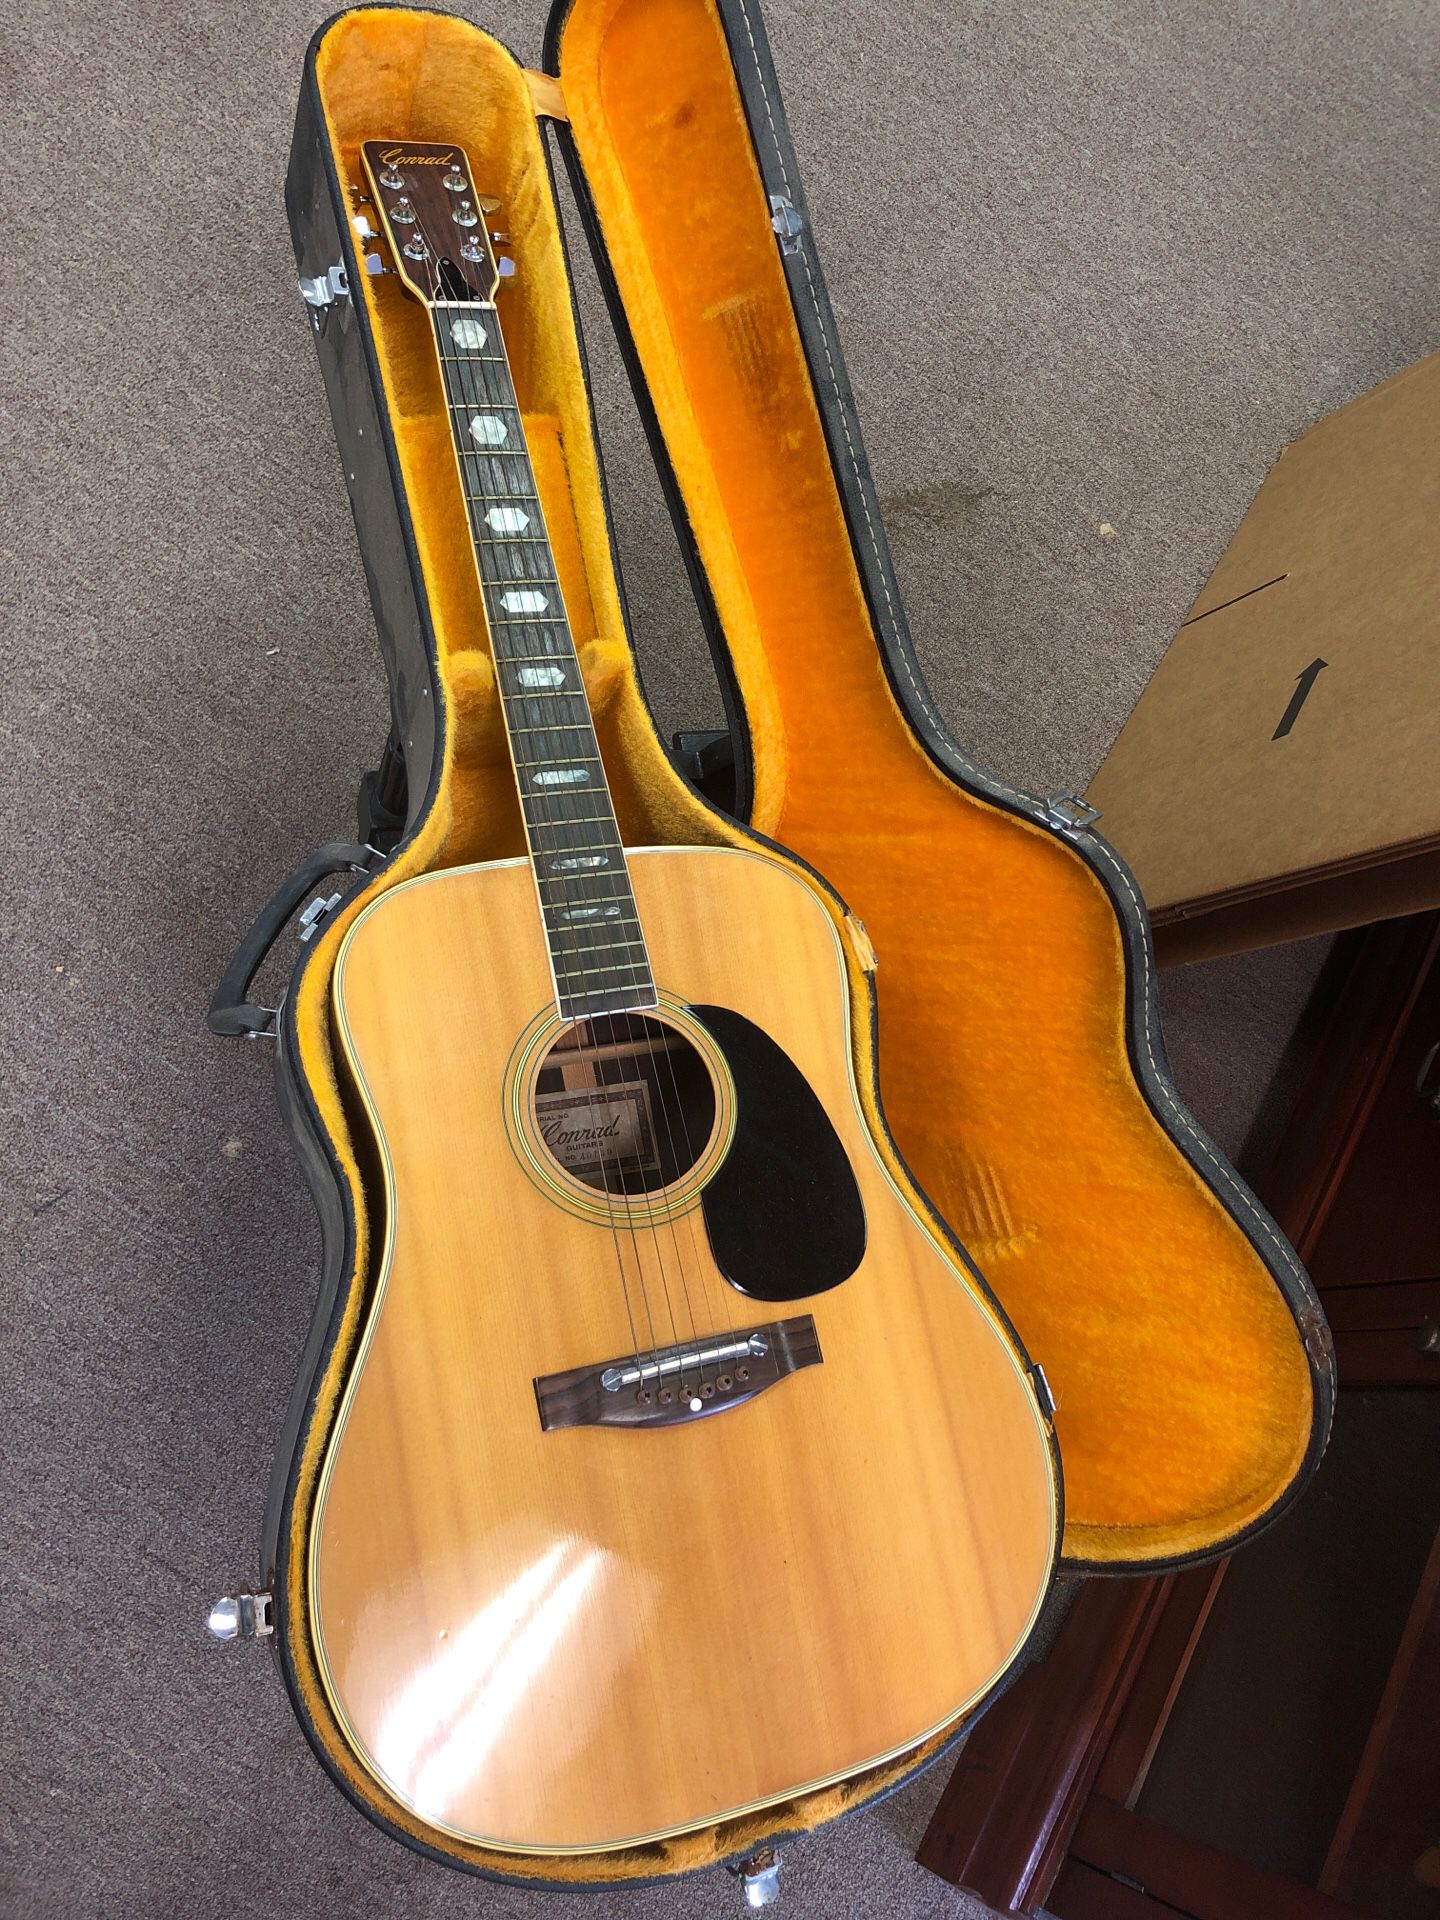 Conrad 6 String Acoustic Guitar 70s?